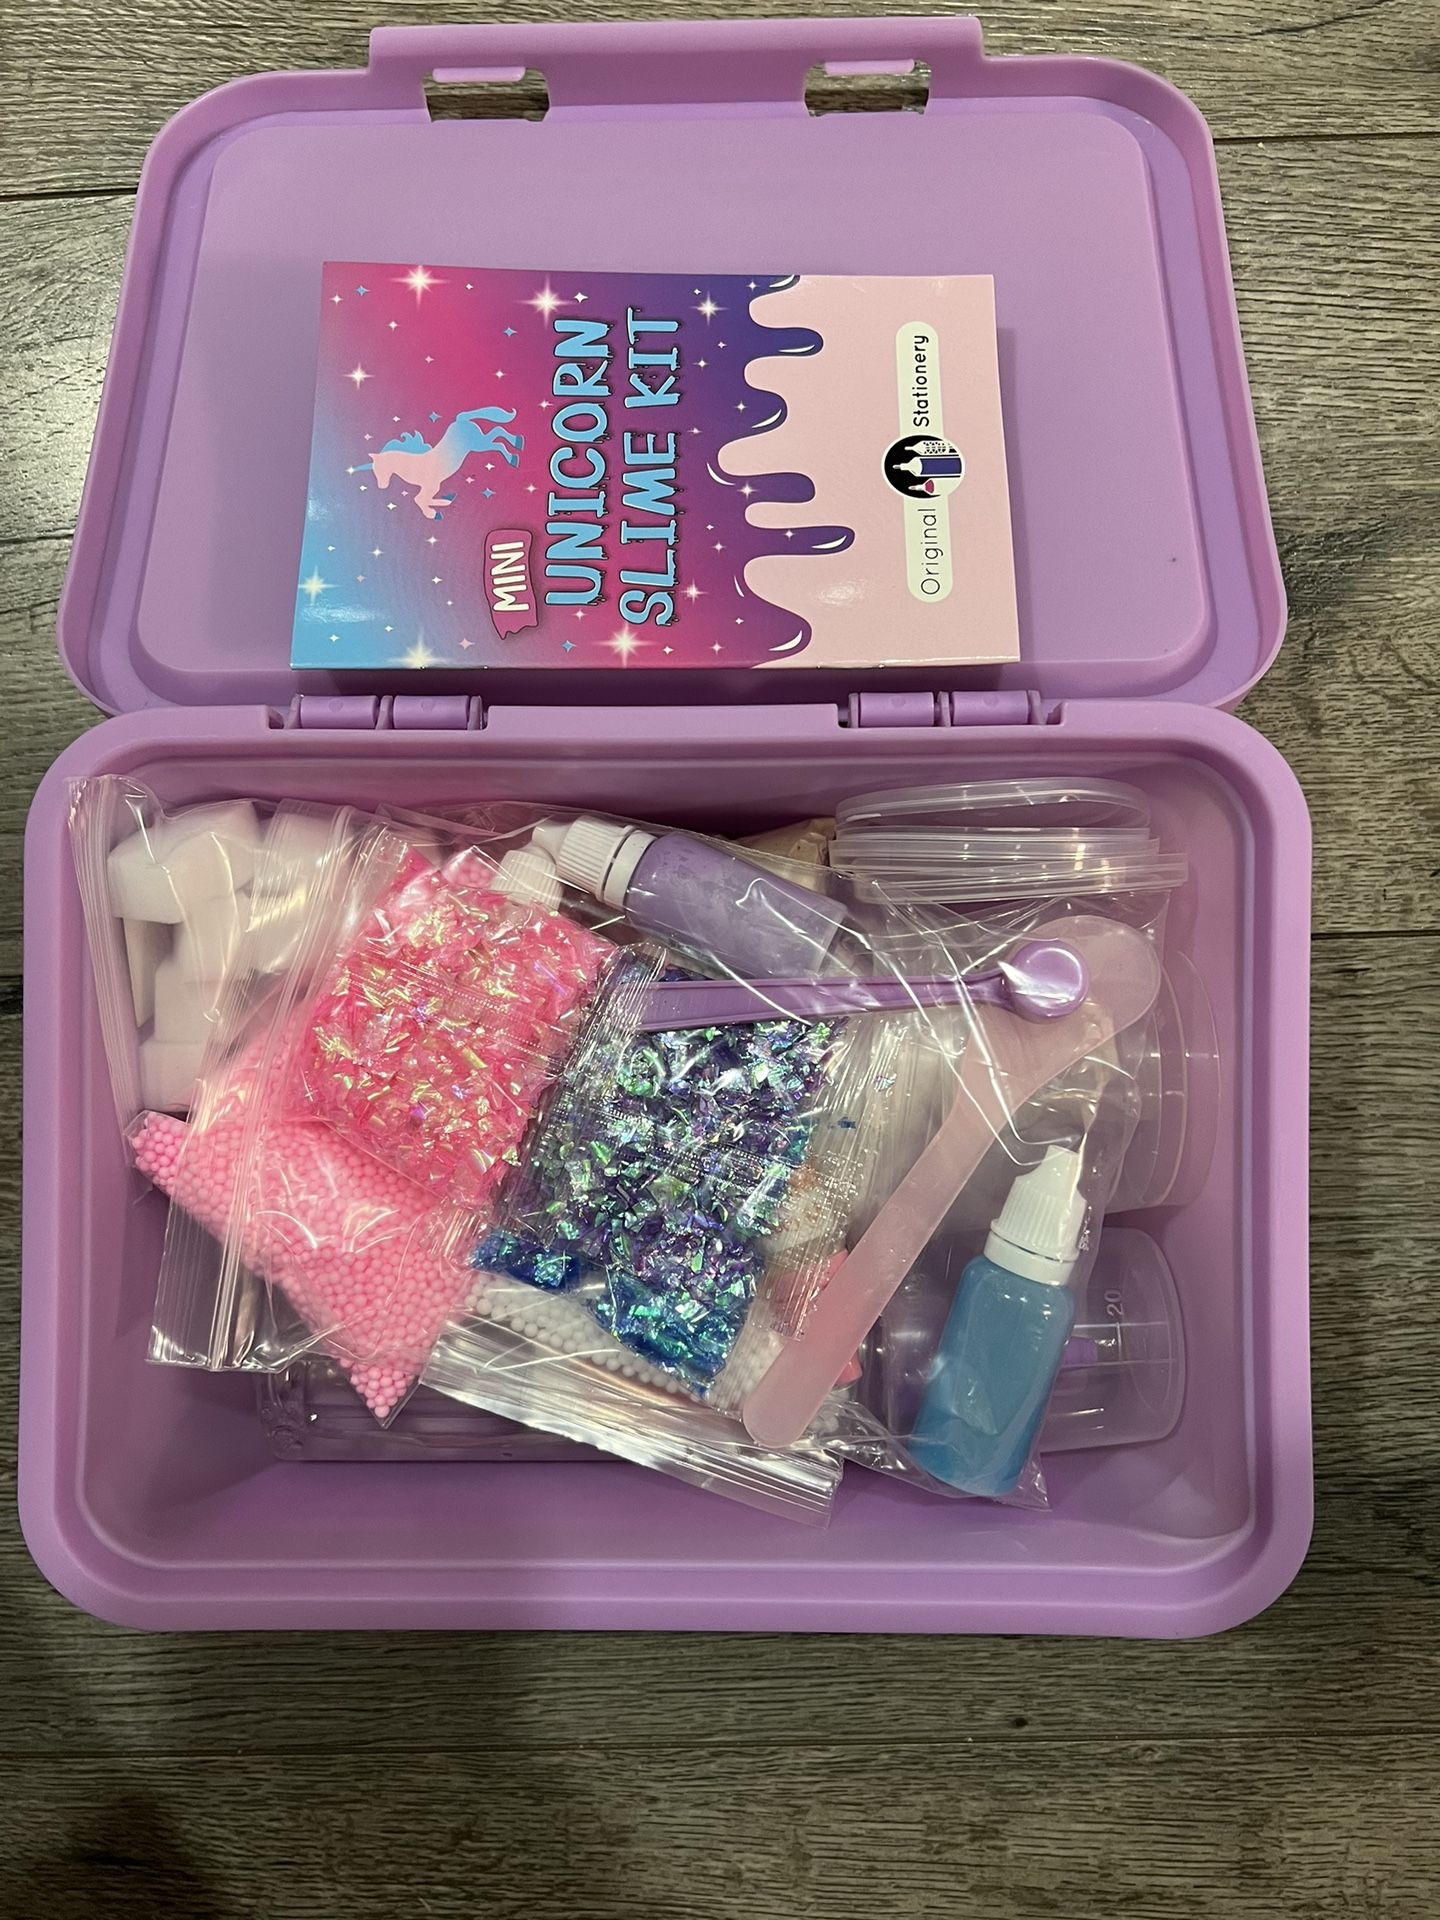 Original Stationery Unicorn Slime Kit Supplies Stuff for Girls Making Slime [Everything in One Box] Kids Can Make Unicorn